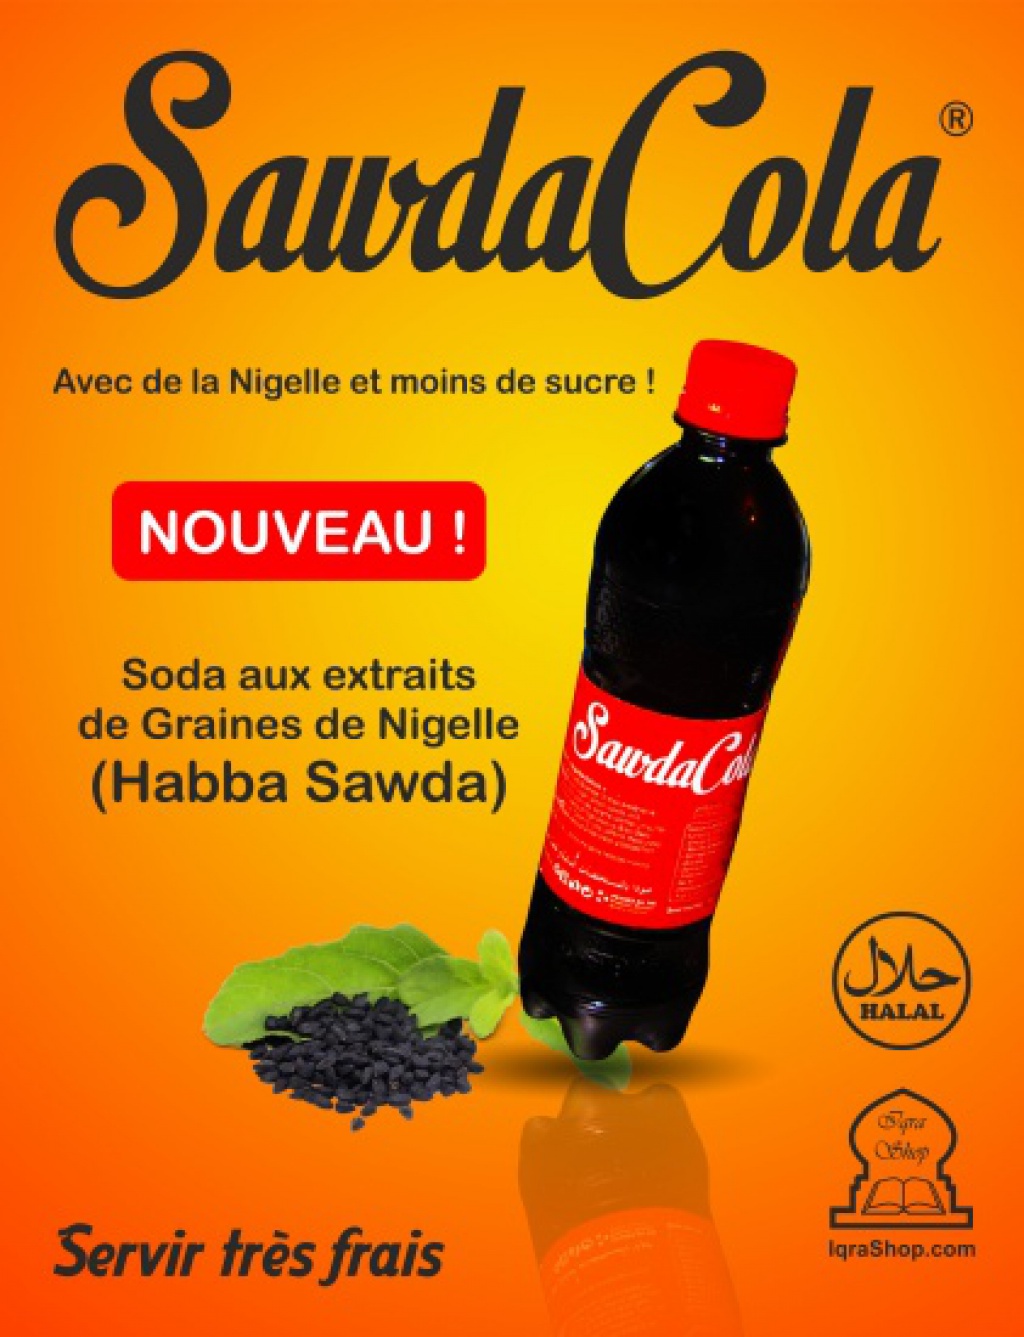 buvez intelligemment avec Sawda Cola 